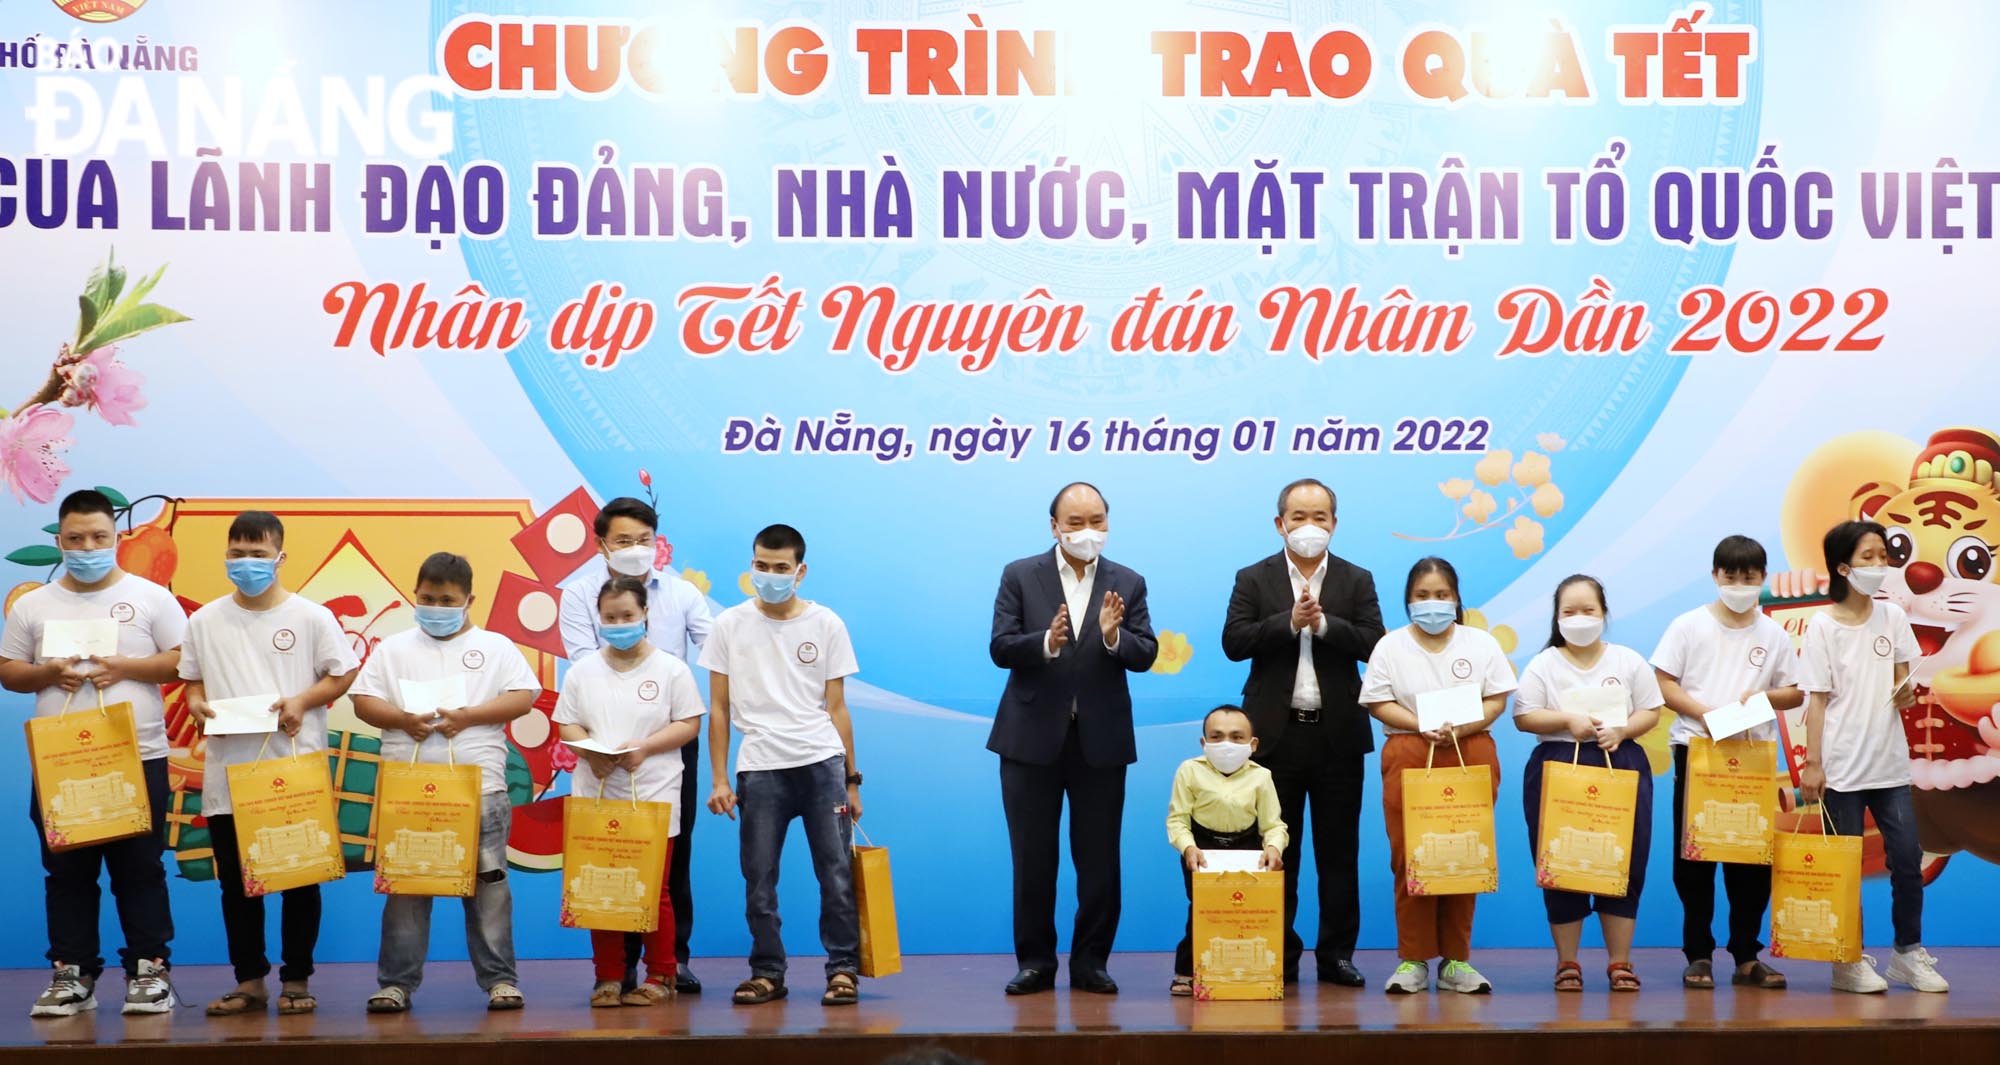 President Nguyen Xuan Phuc presenting Tet gifts to victims of Agent Orange in Da Nang. Photo: NGOC PHU